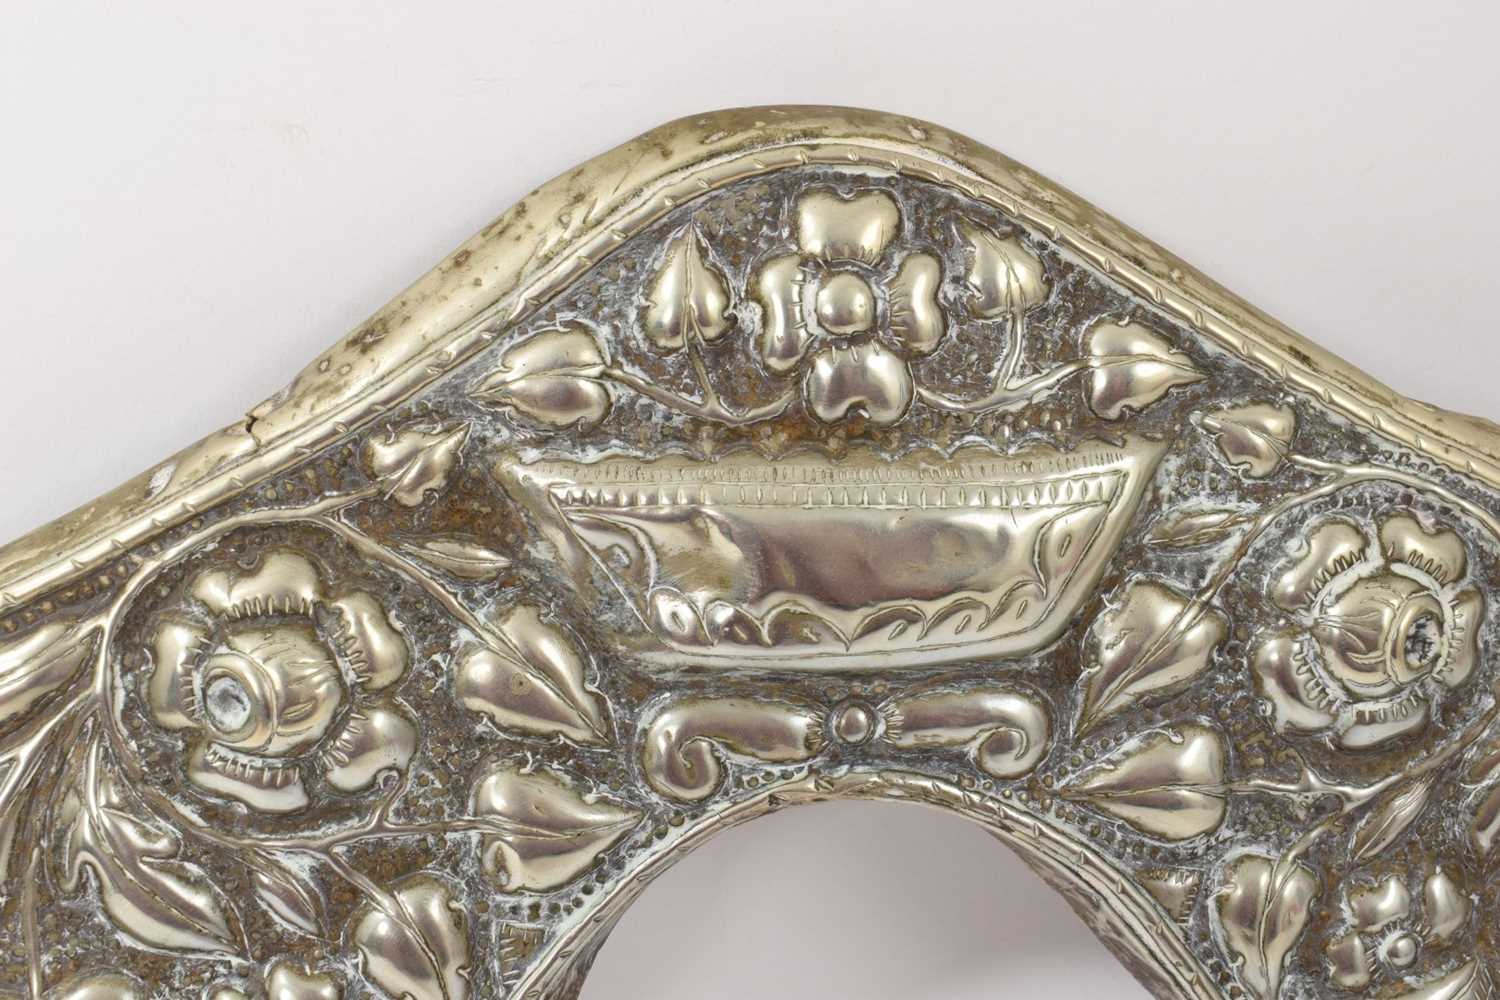 19th century South American white metal saddle mount - Image 3 of 5